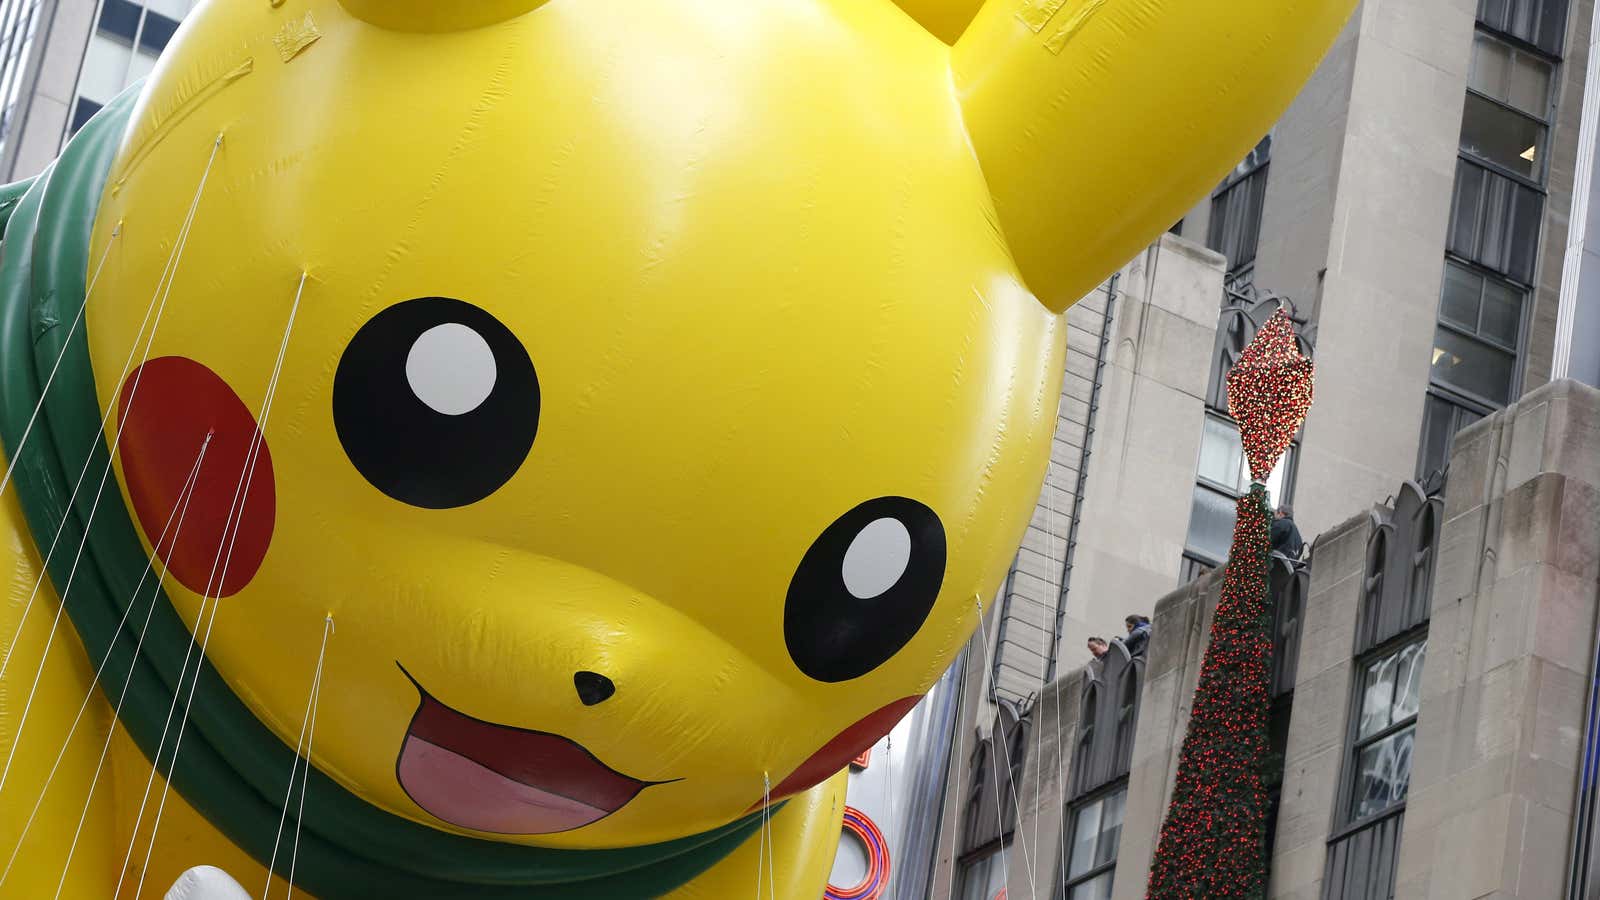 A giant Pikachu ballon in New York.